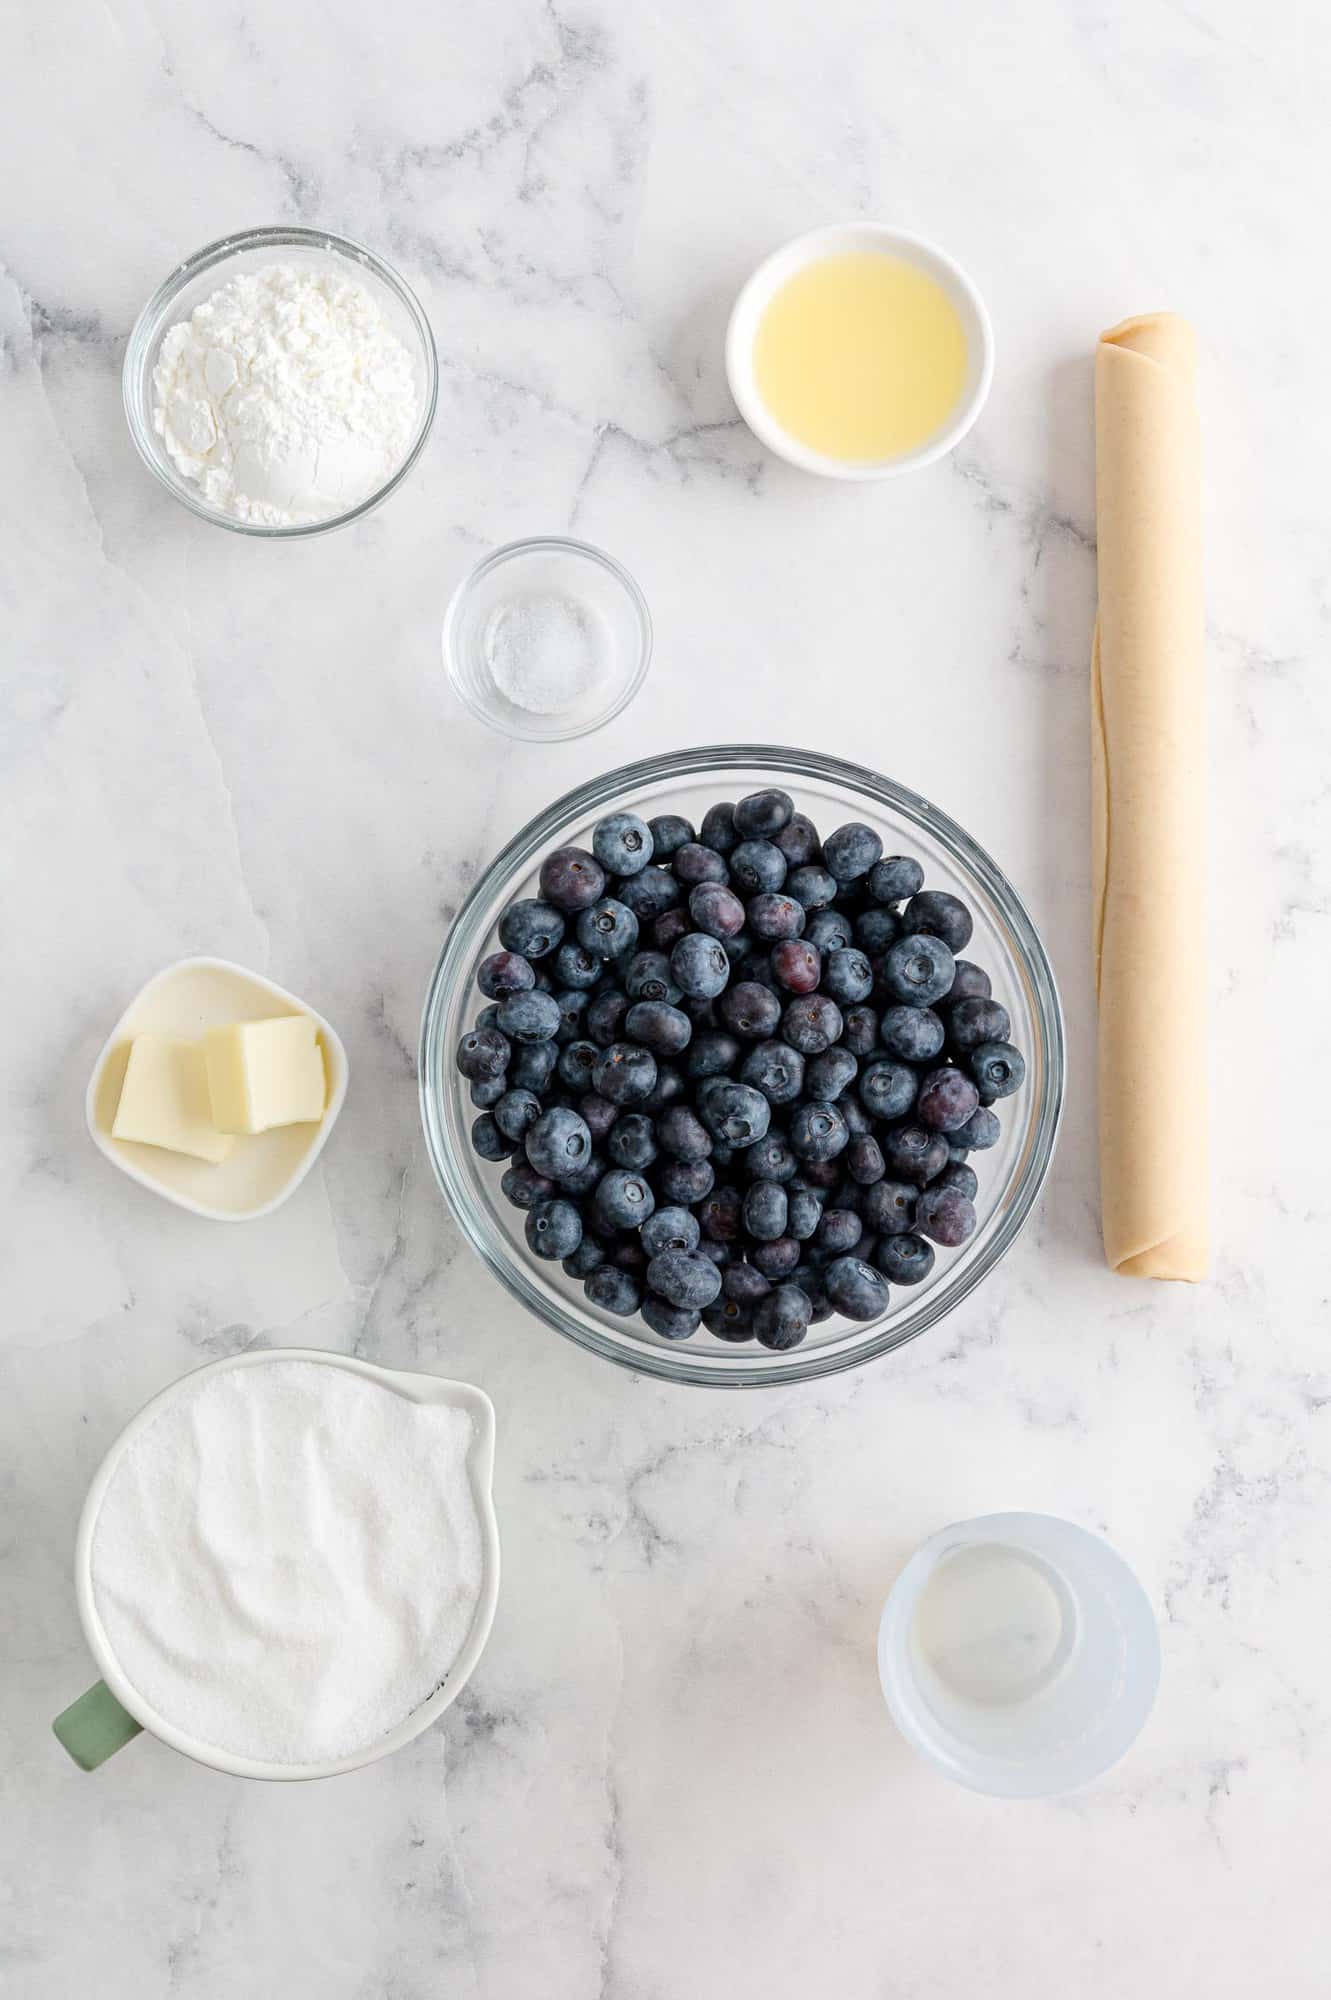 Ingredients in separate bowls, including fresh blueberries.